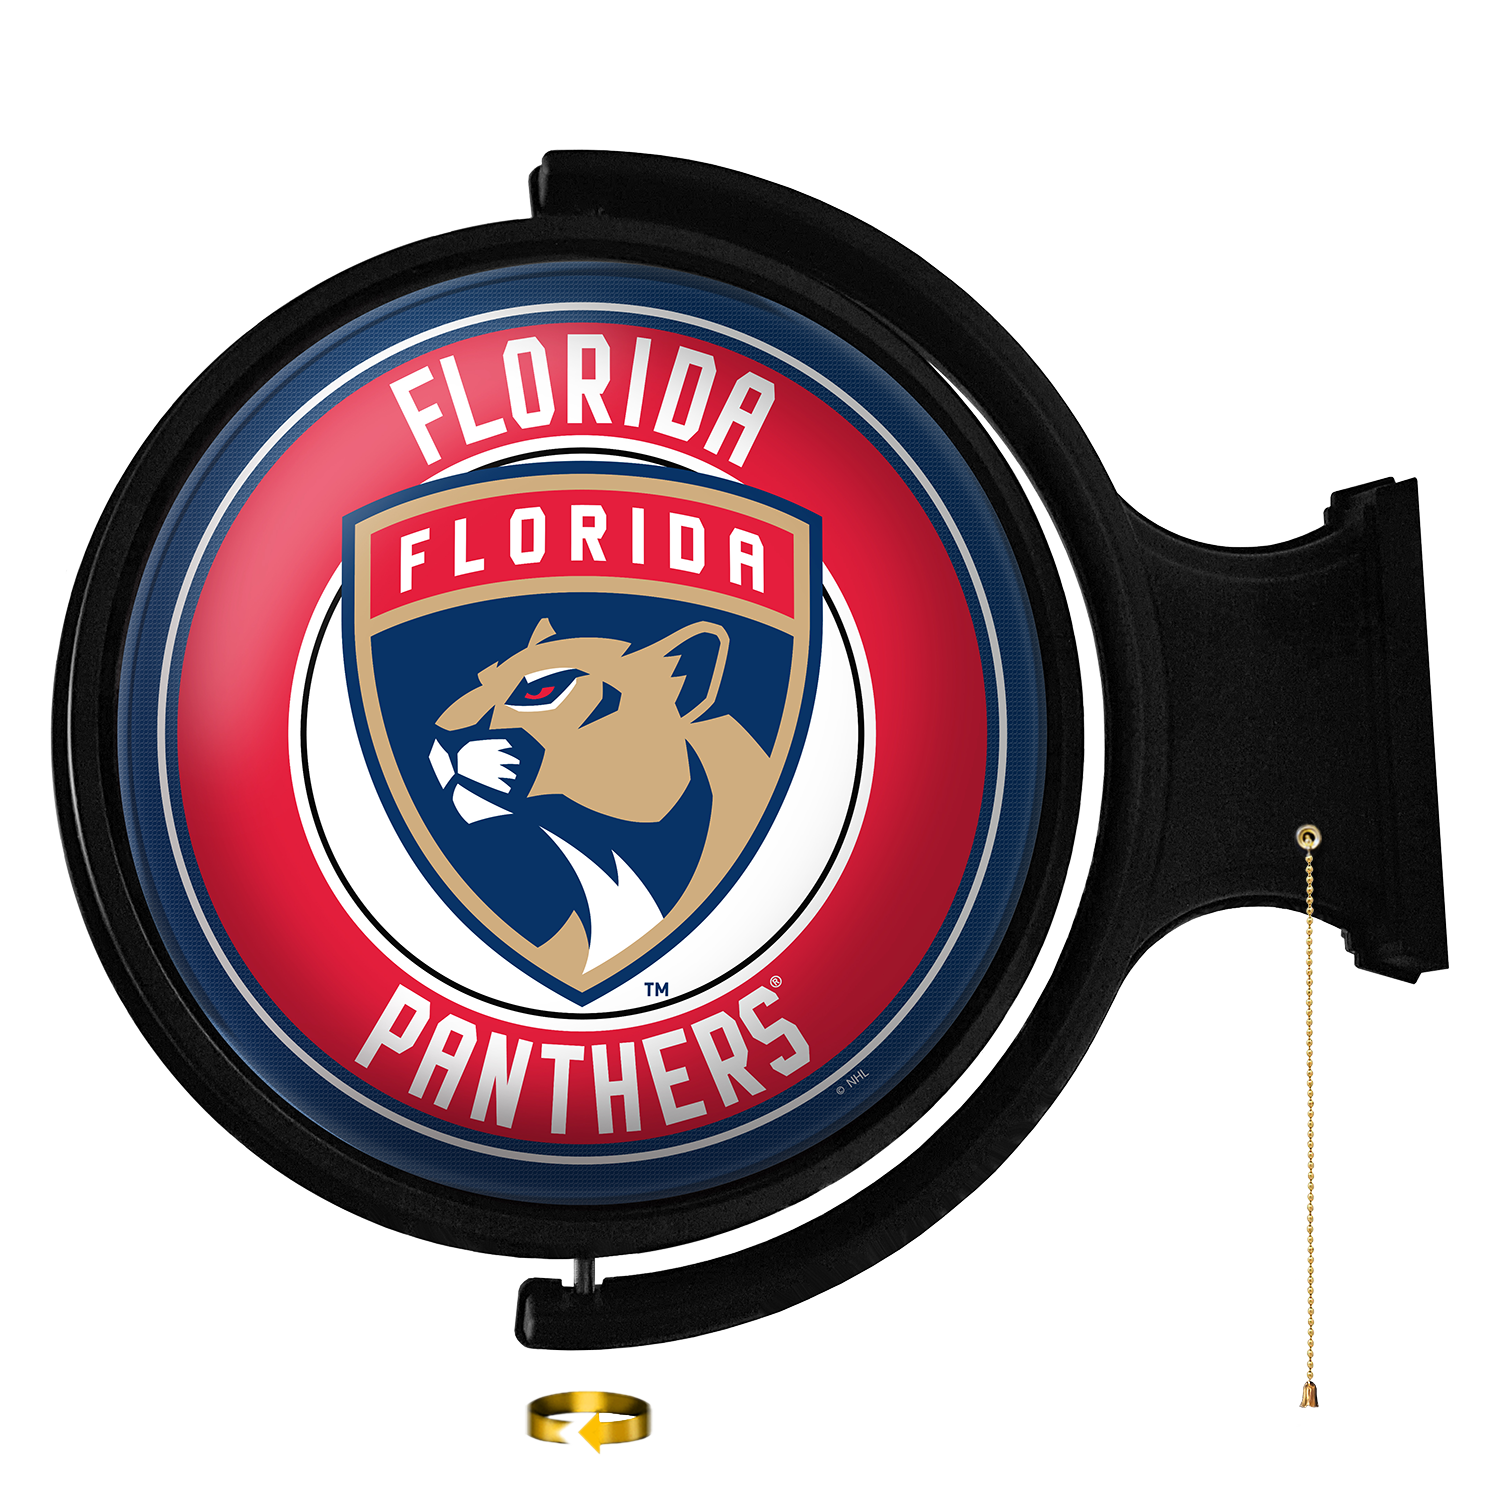 Florida Panthers Round Rotating Wall Sign